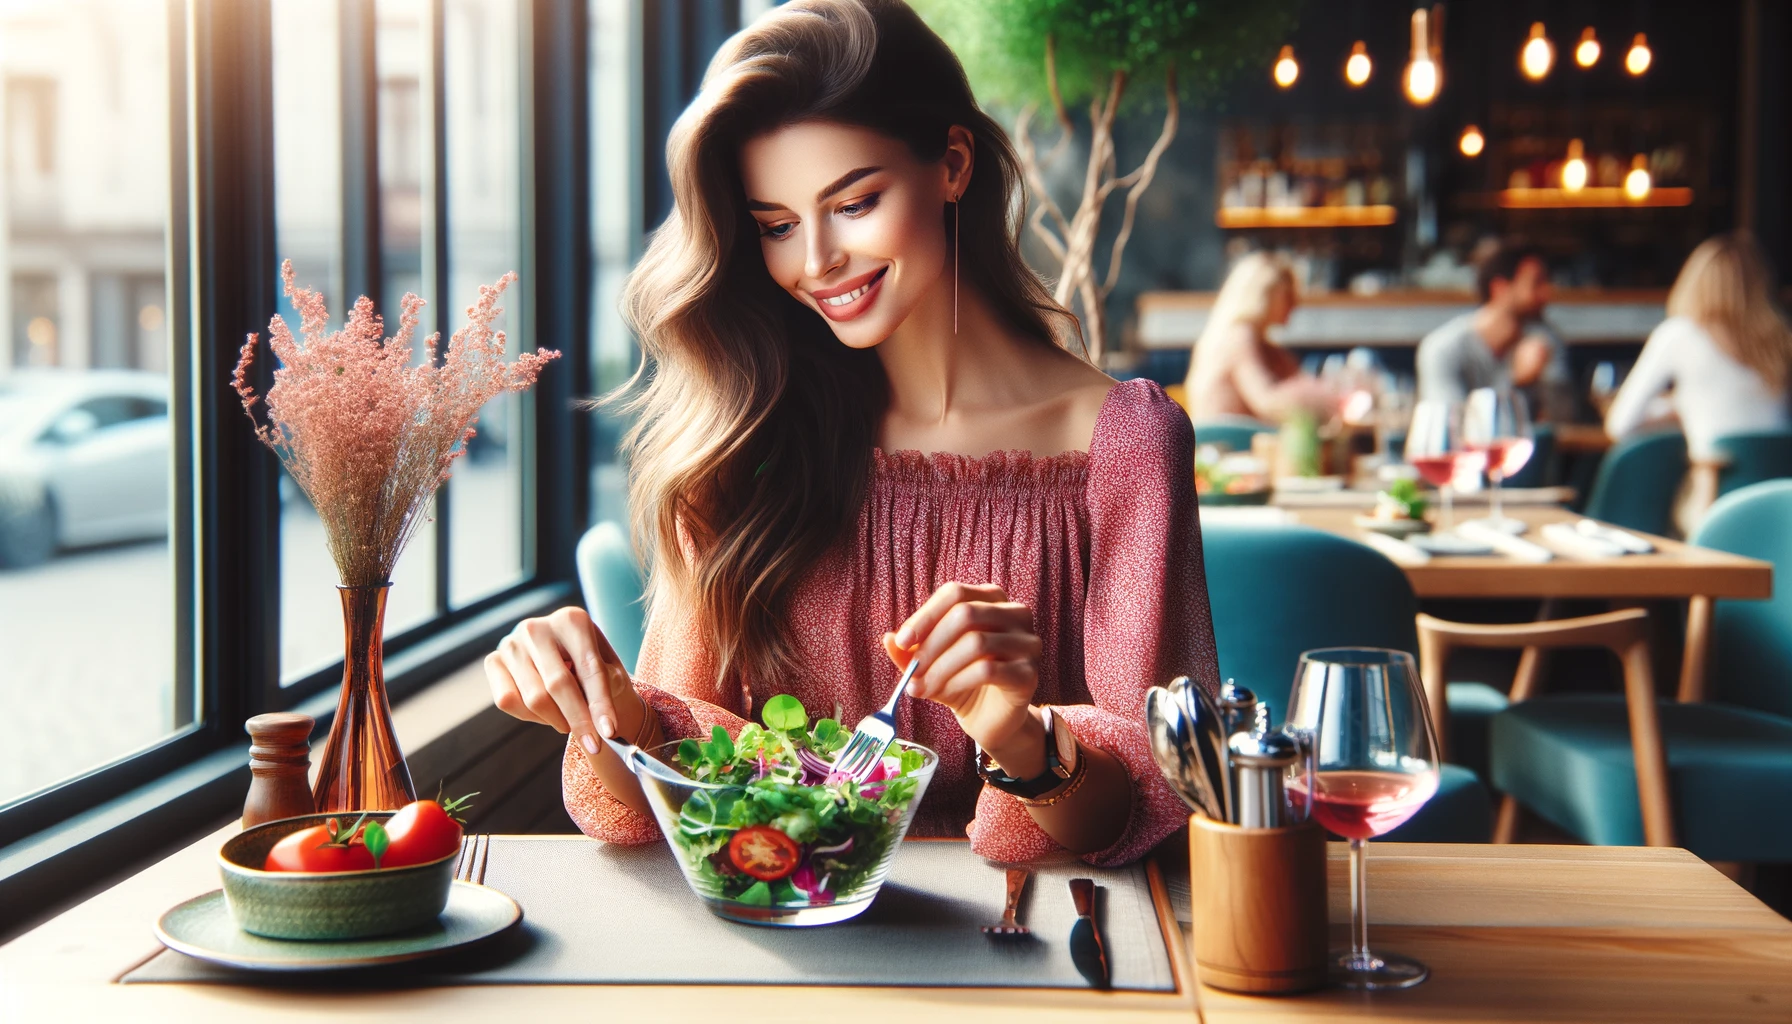 Woman enjoying salad at restaurant.